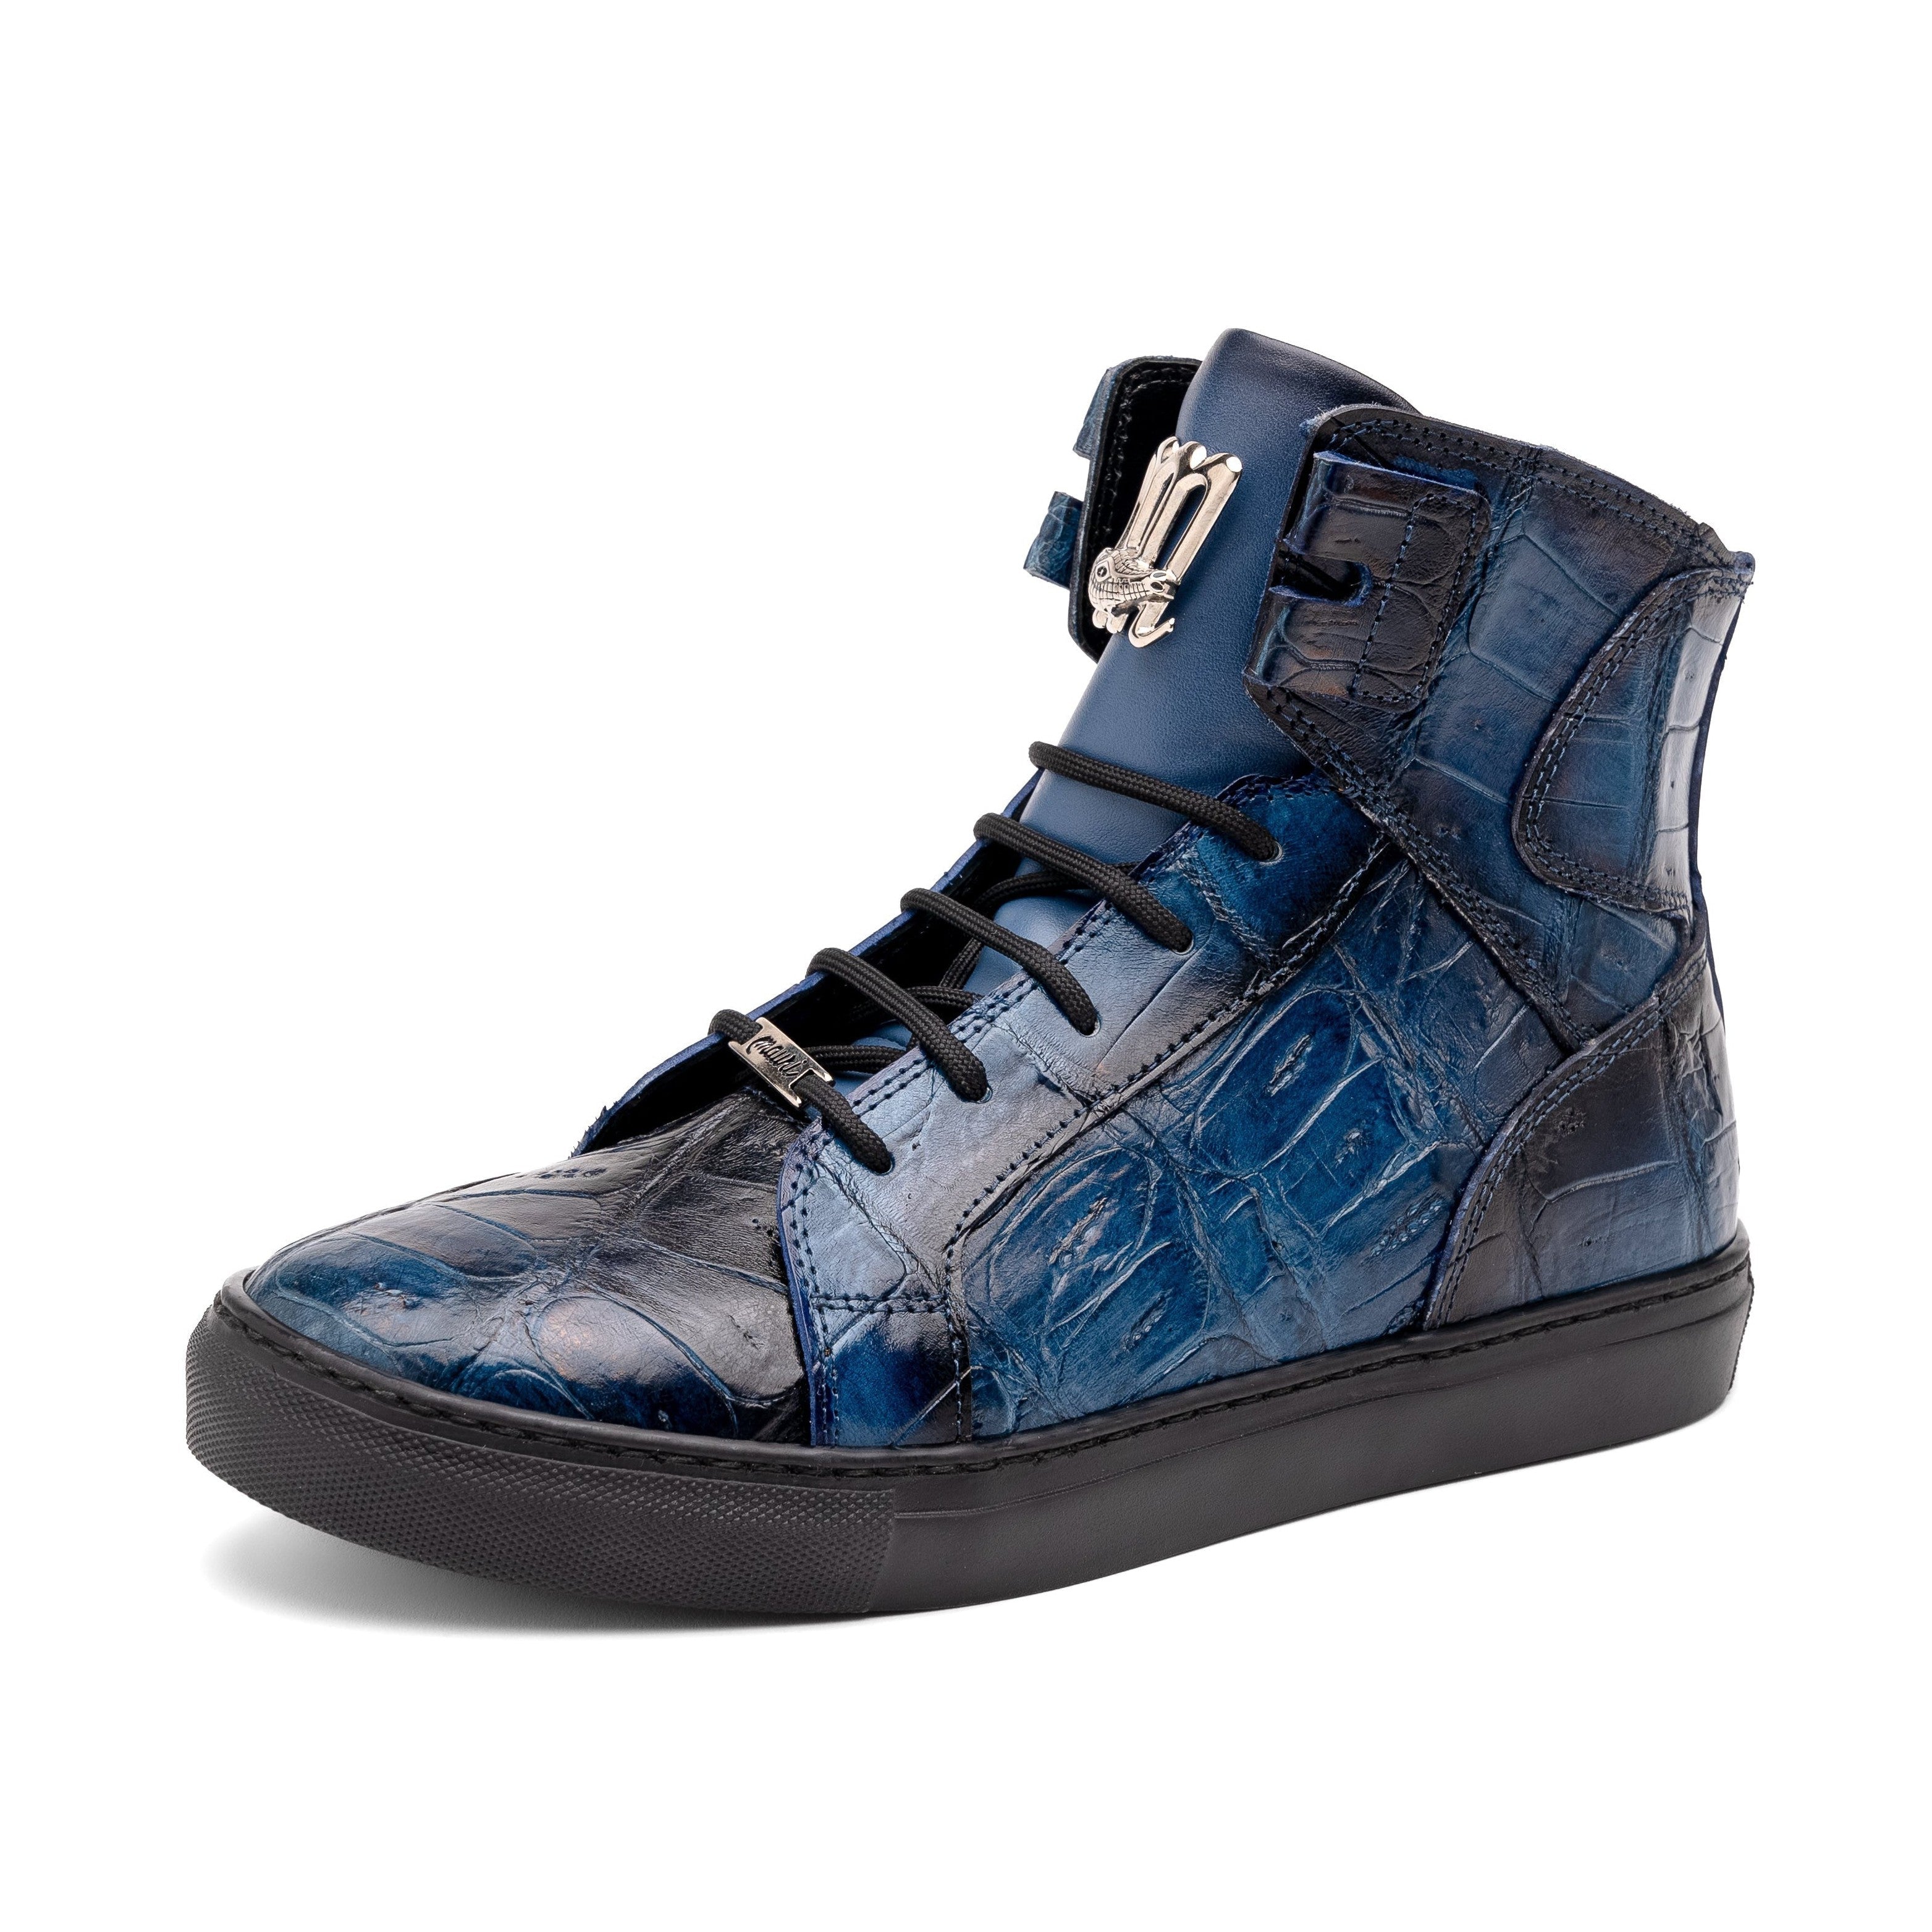 Mauri Golden Boy 6129-1 Men's Shoes Blue with Black Finished 